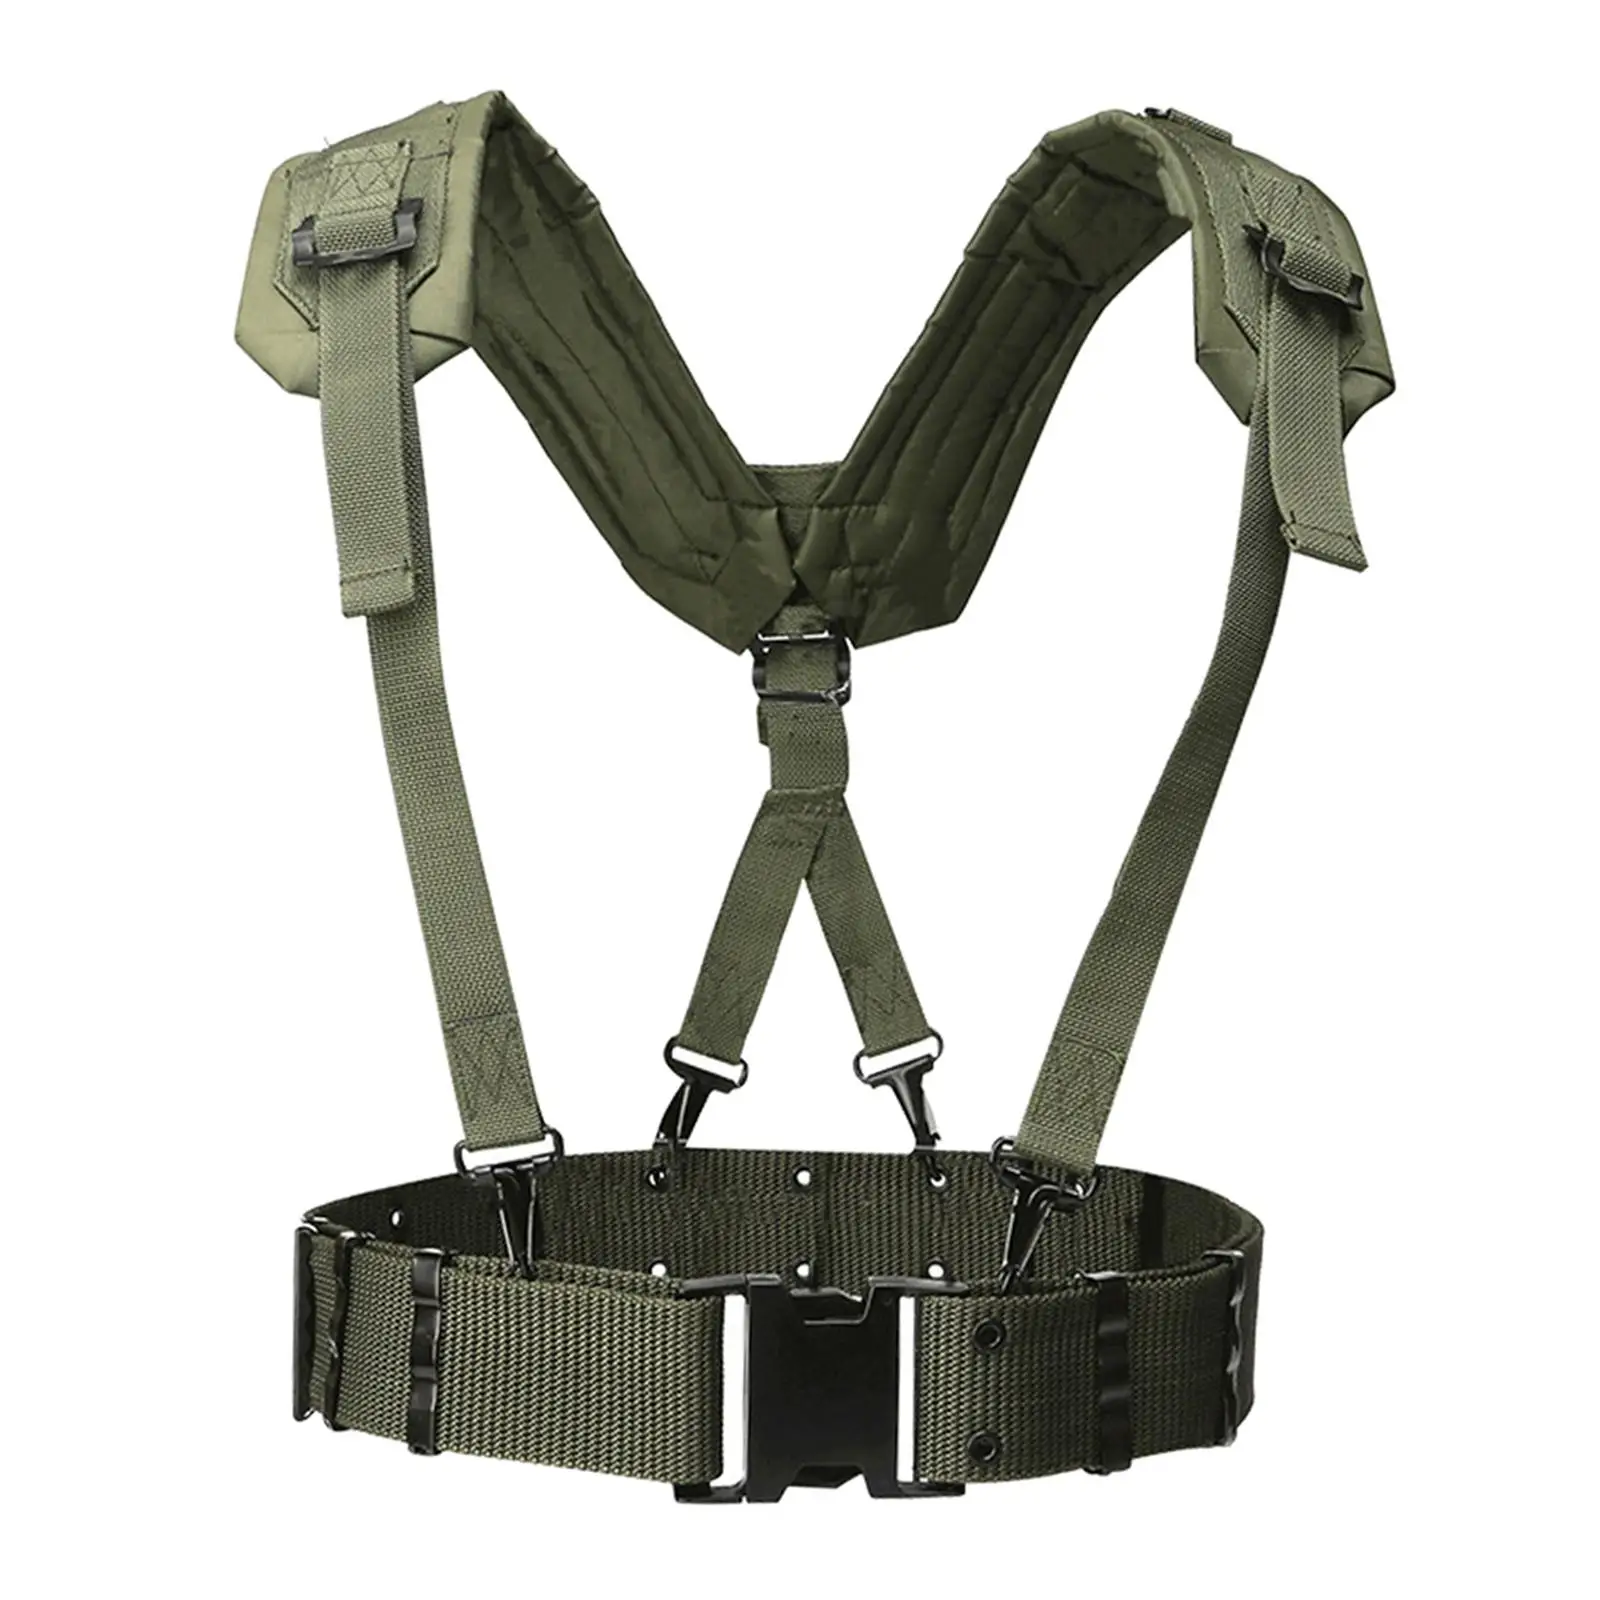 Y Shaped Suspenders Belt, Nylon Suspenders for Duty Belt, Adjustable Belt